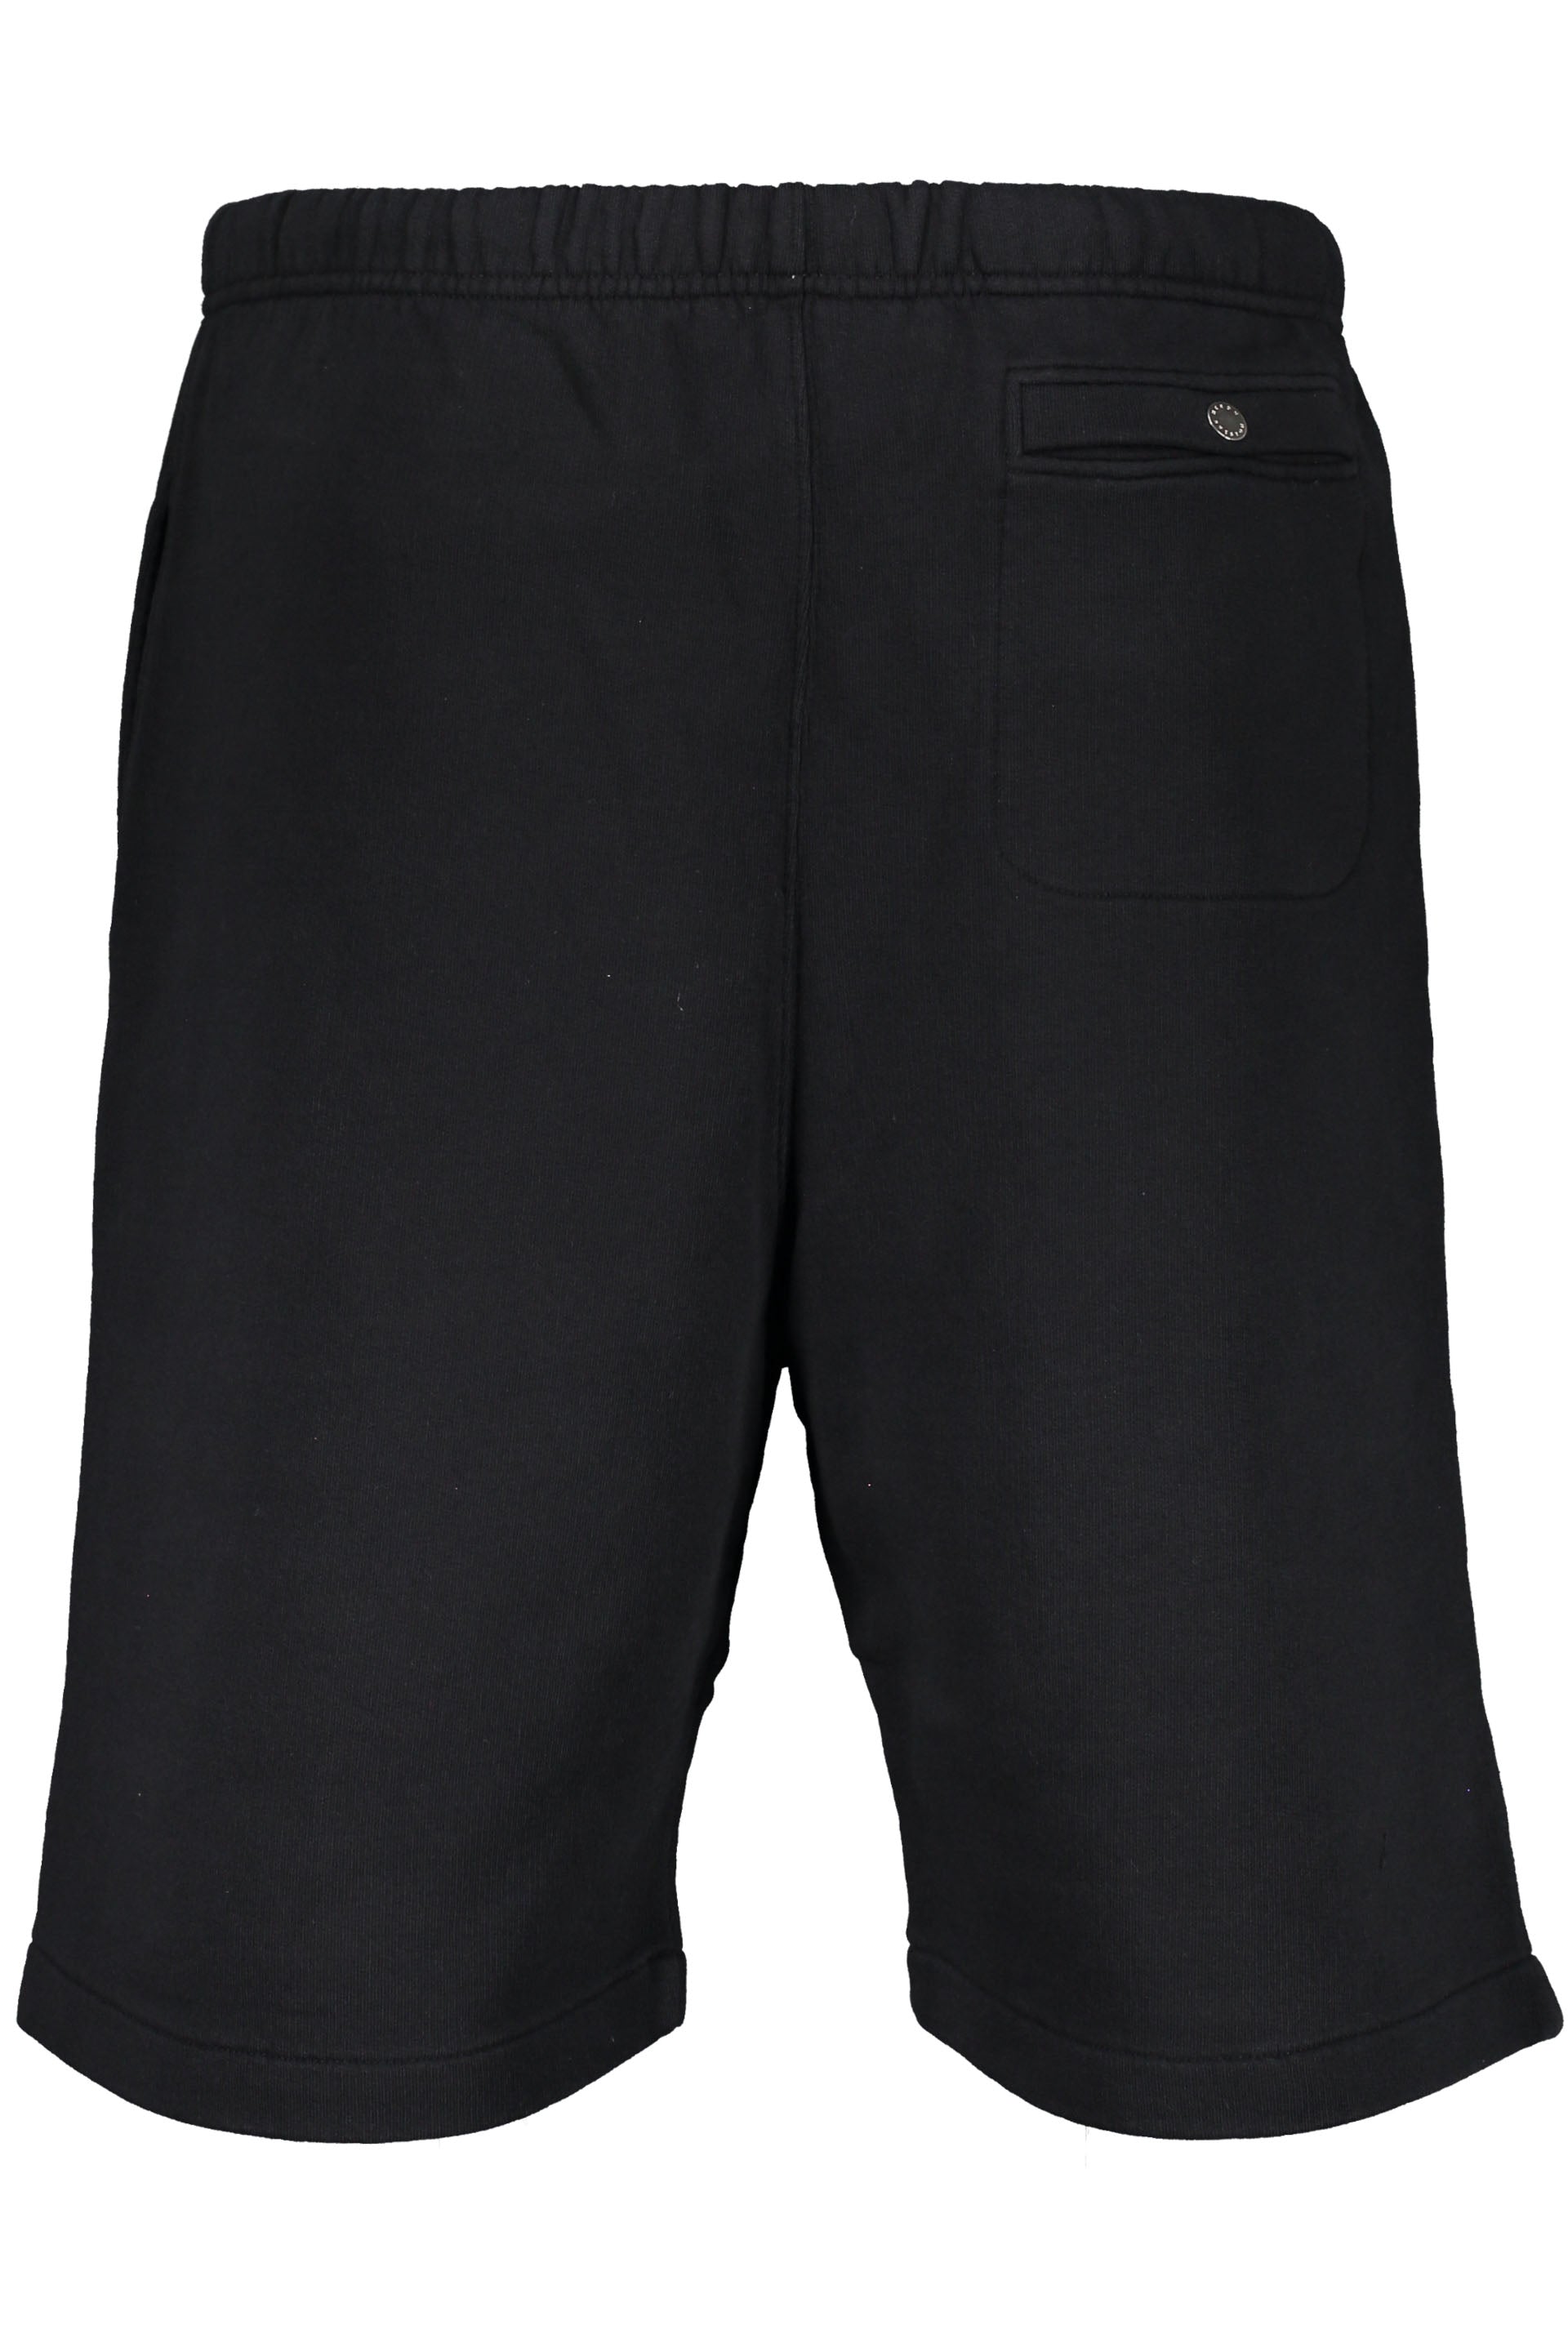 Cotton bermuda shorts-Heron Preston-OUTLET-SALE-ARCHIVIST